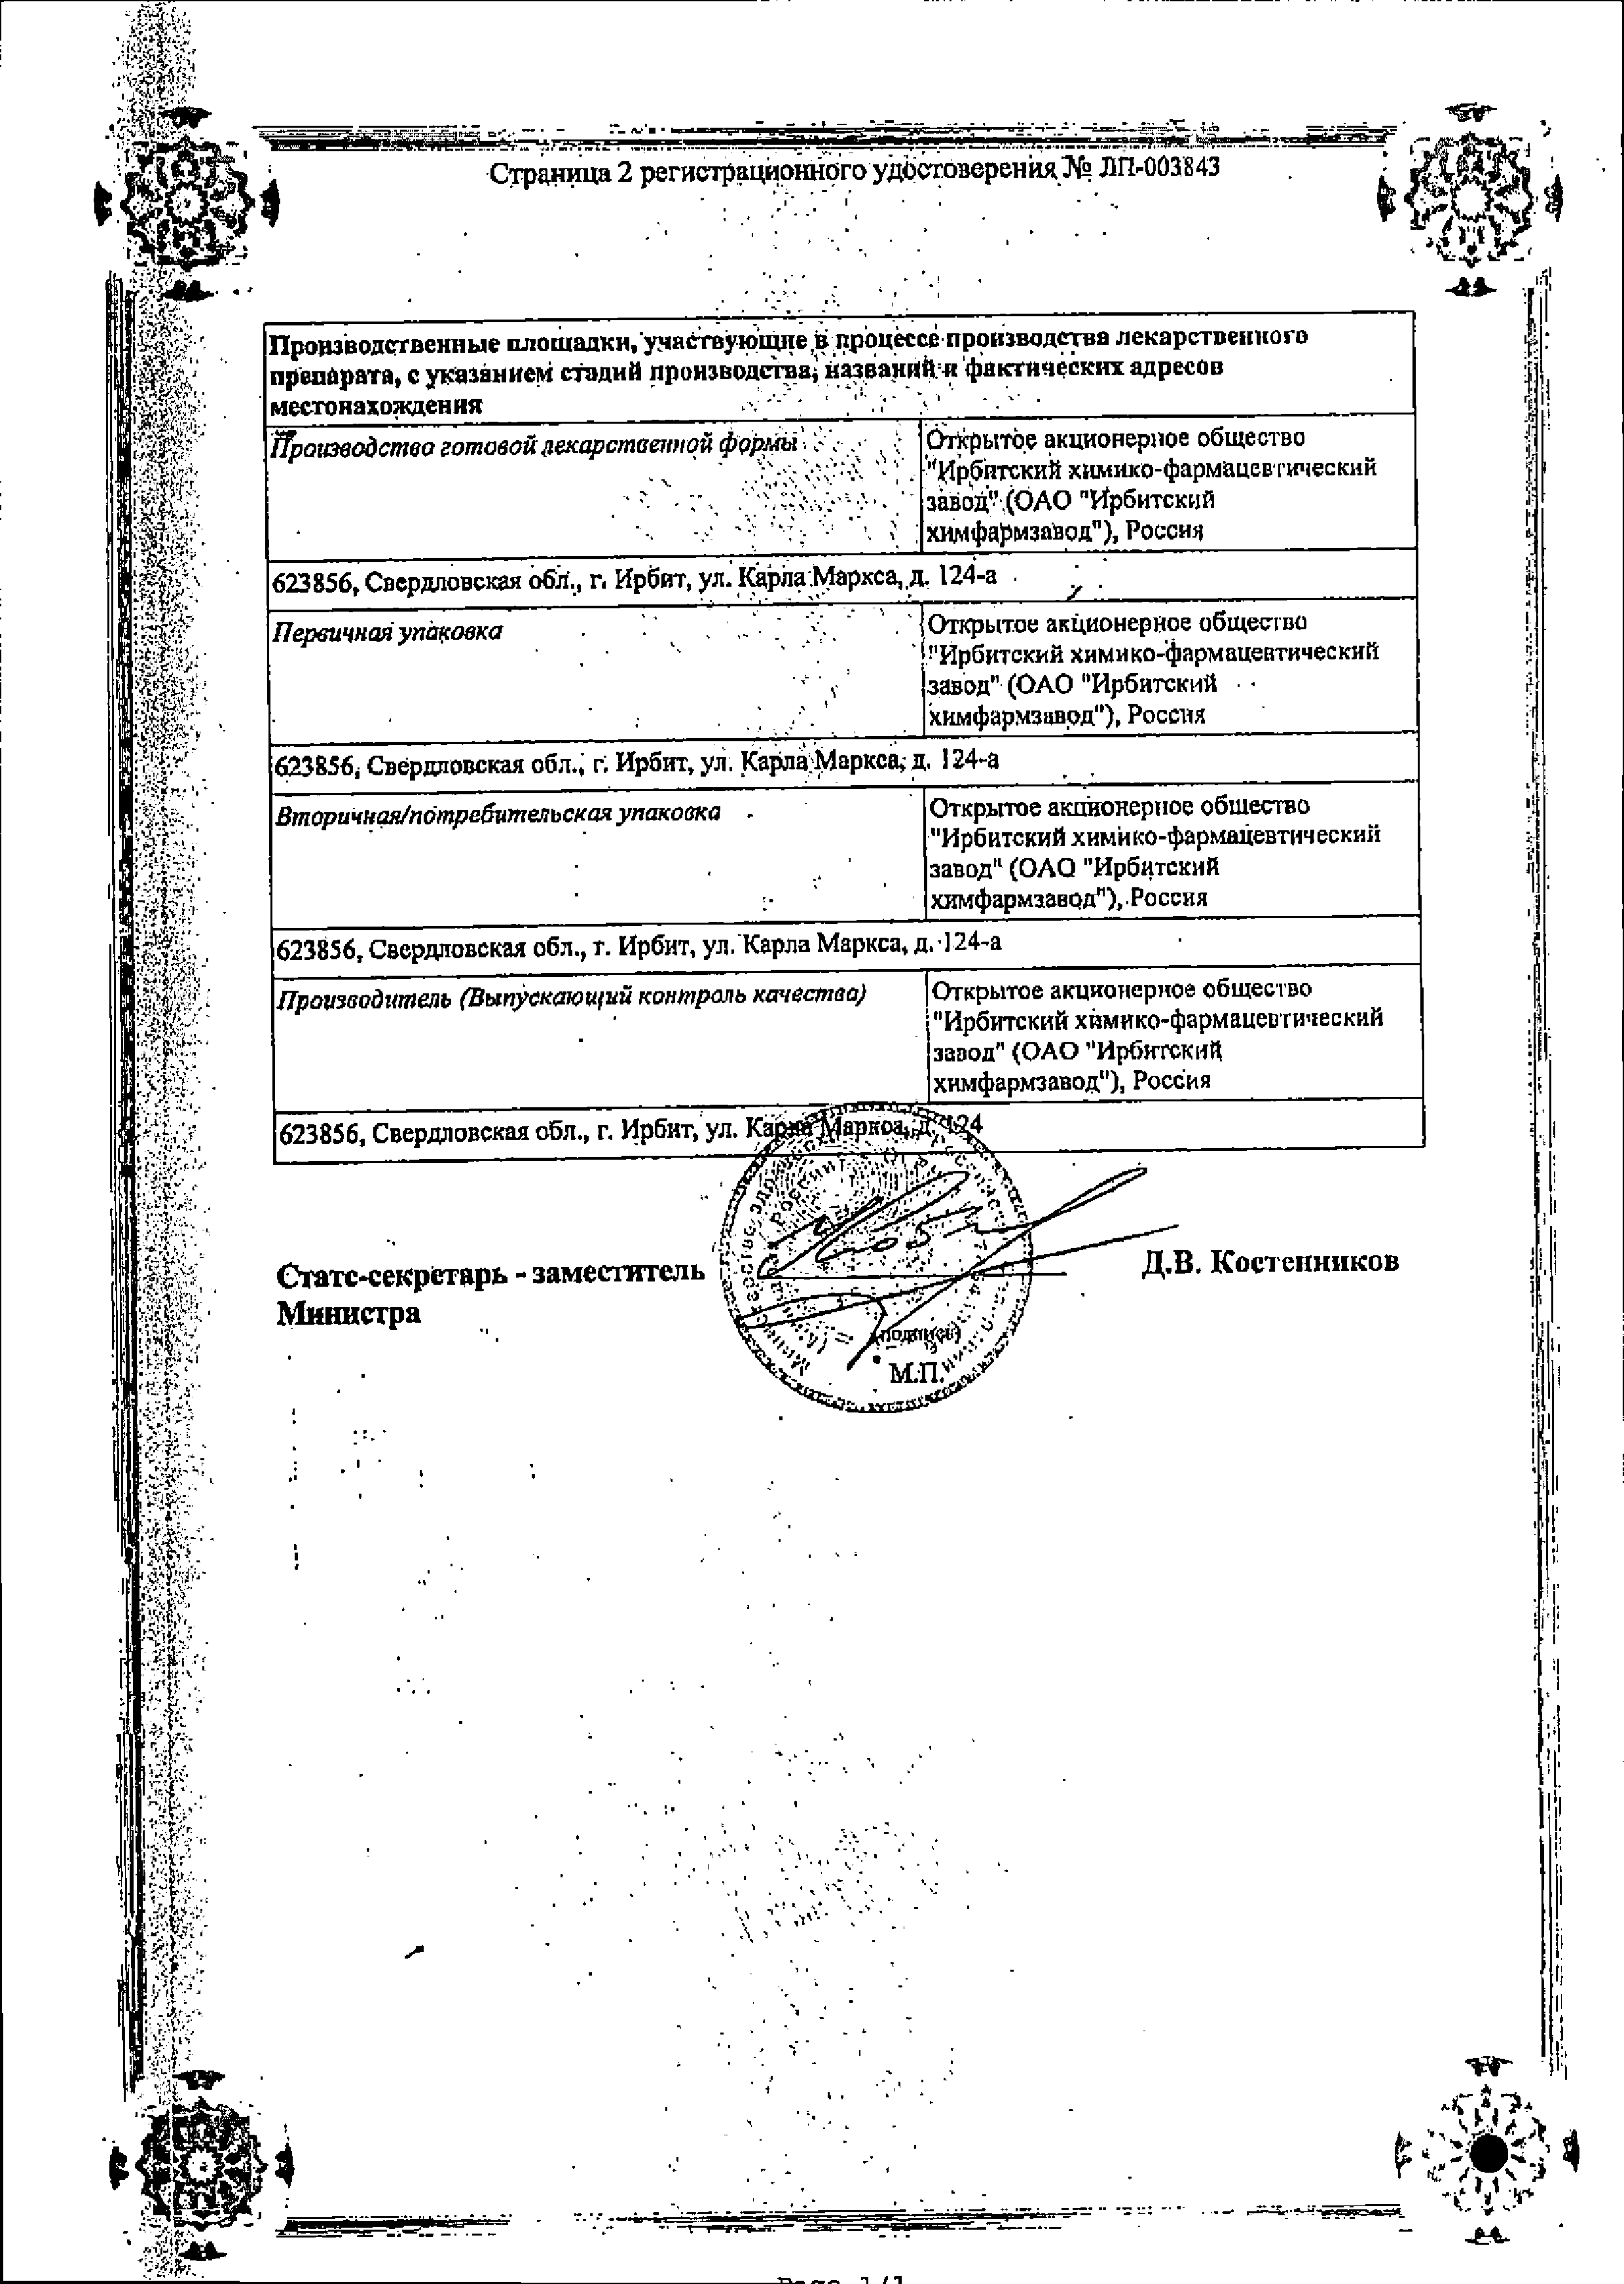 Аторвастатин Авексима сертификат